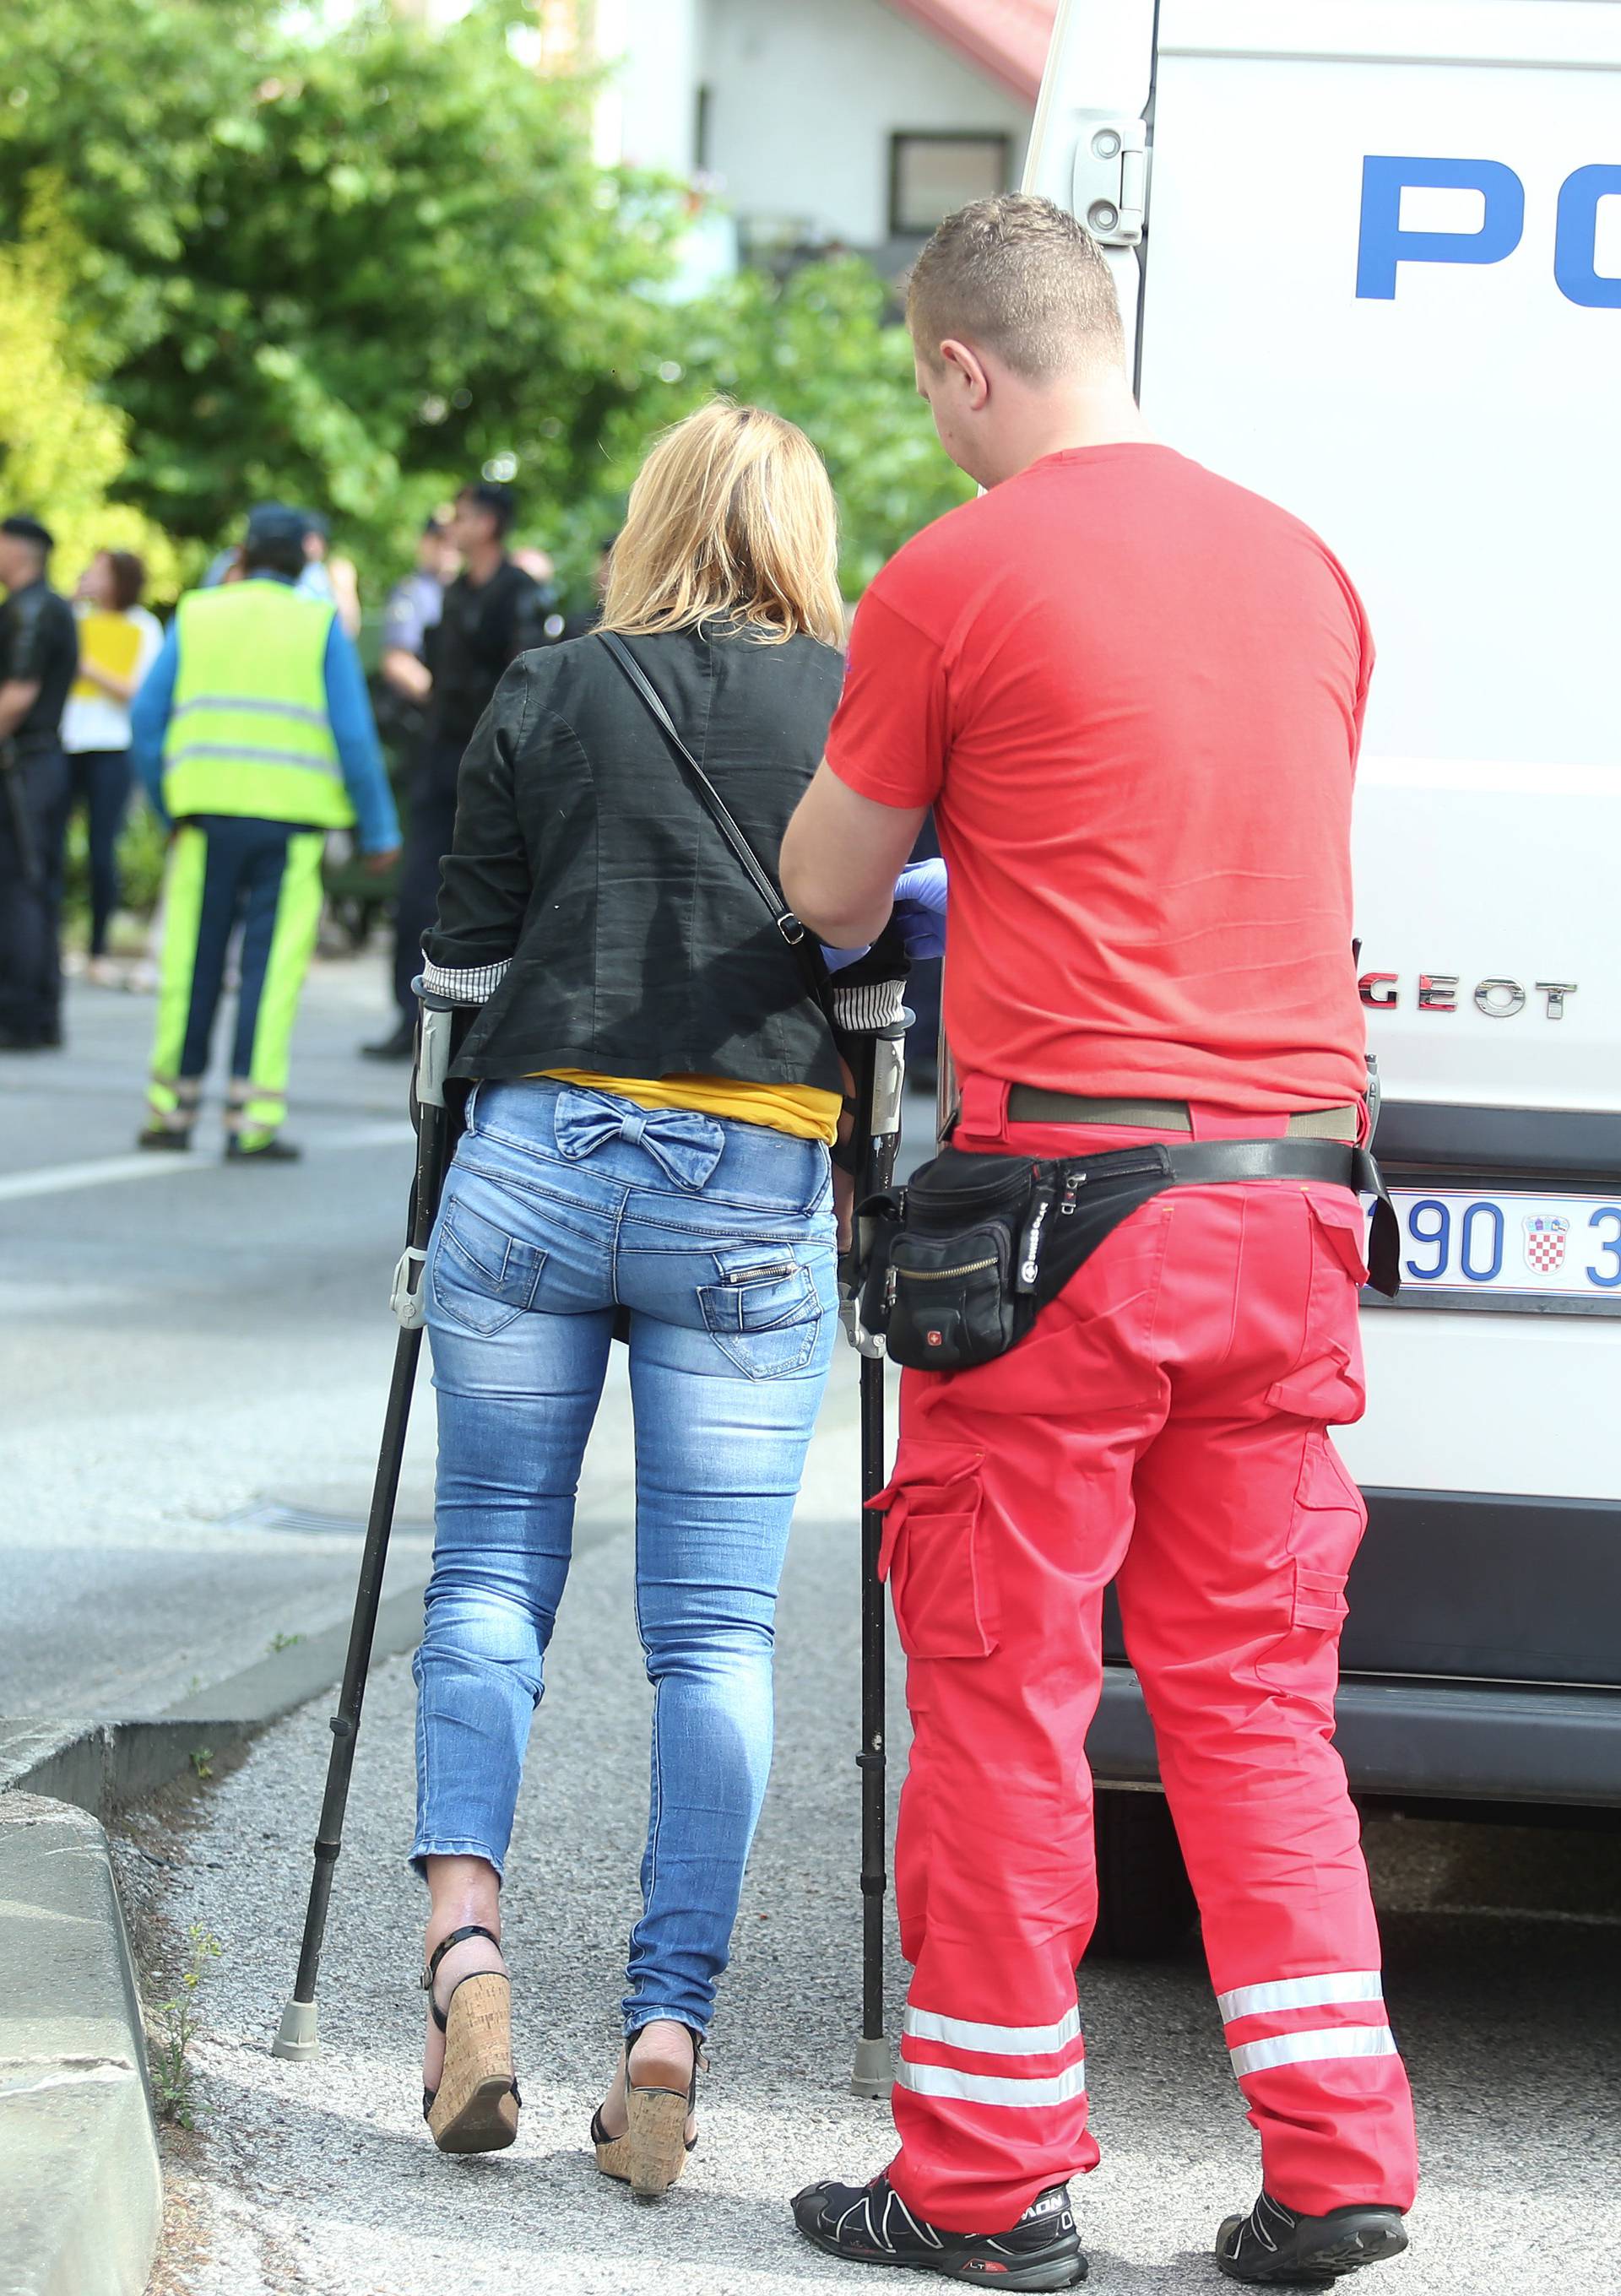 Kaos na deložaciji u Zagrebu: Policajci odnosili prosvjednike